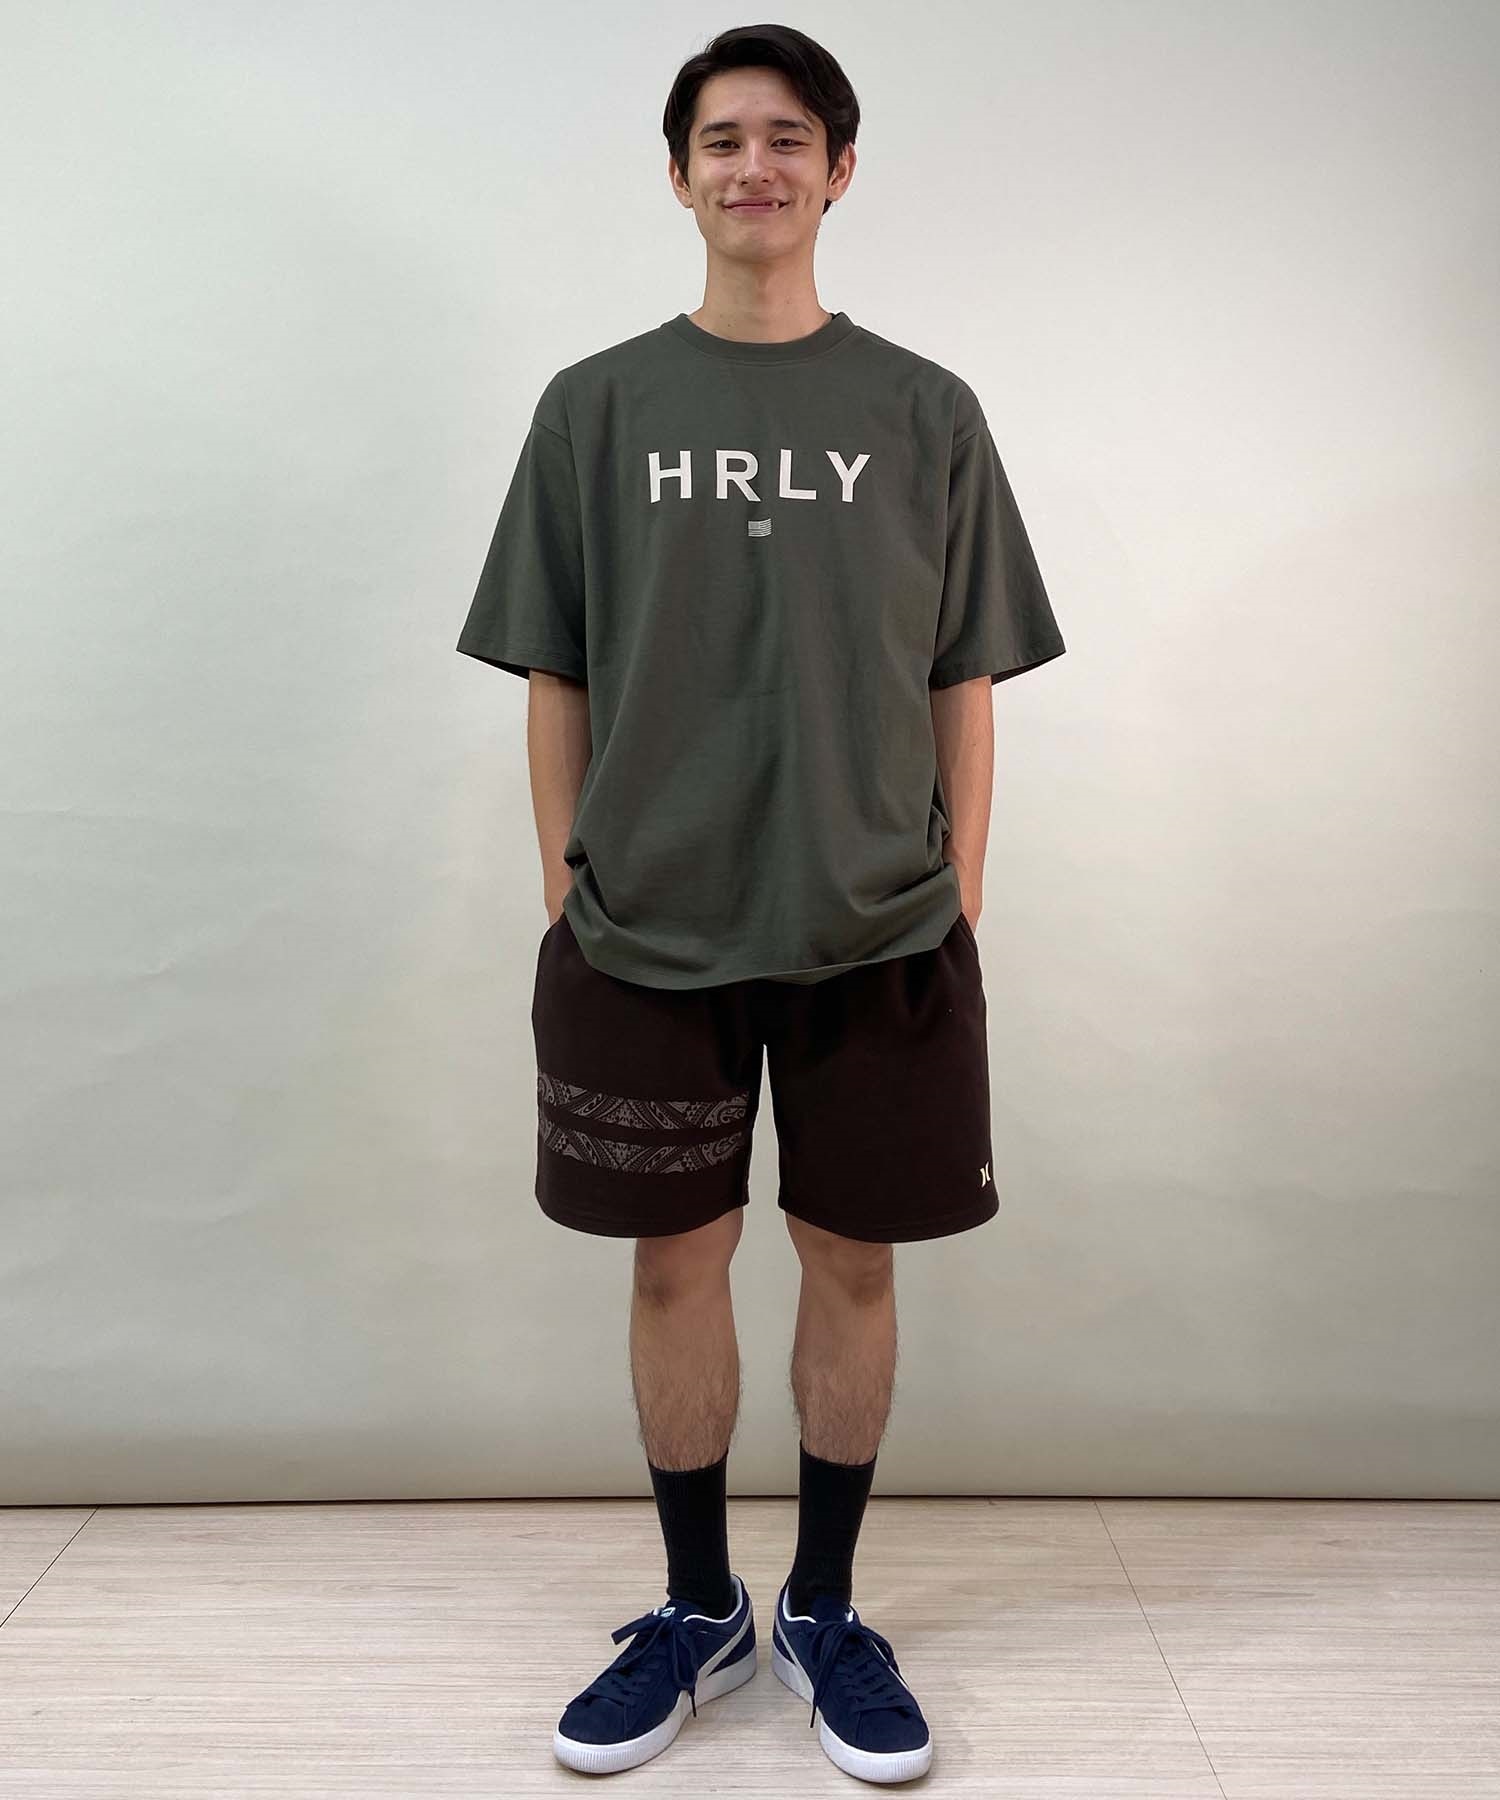 Hurley ハーレー OVERSIZED HURLEY SHORT SLEEVE TEE メンズ 半袖 Tシャツ MSS2411020(CFB-S)